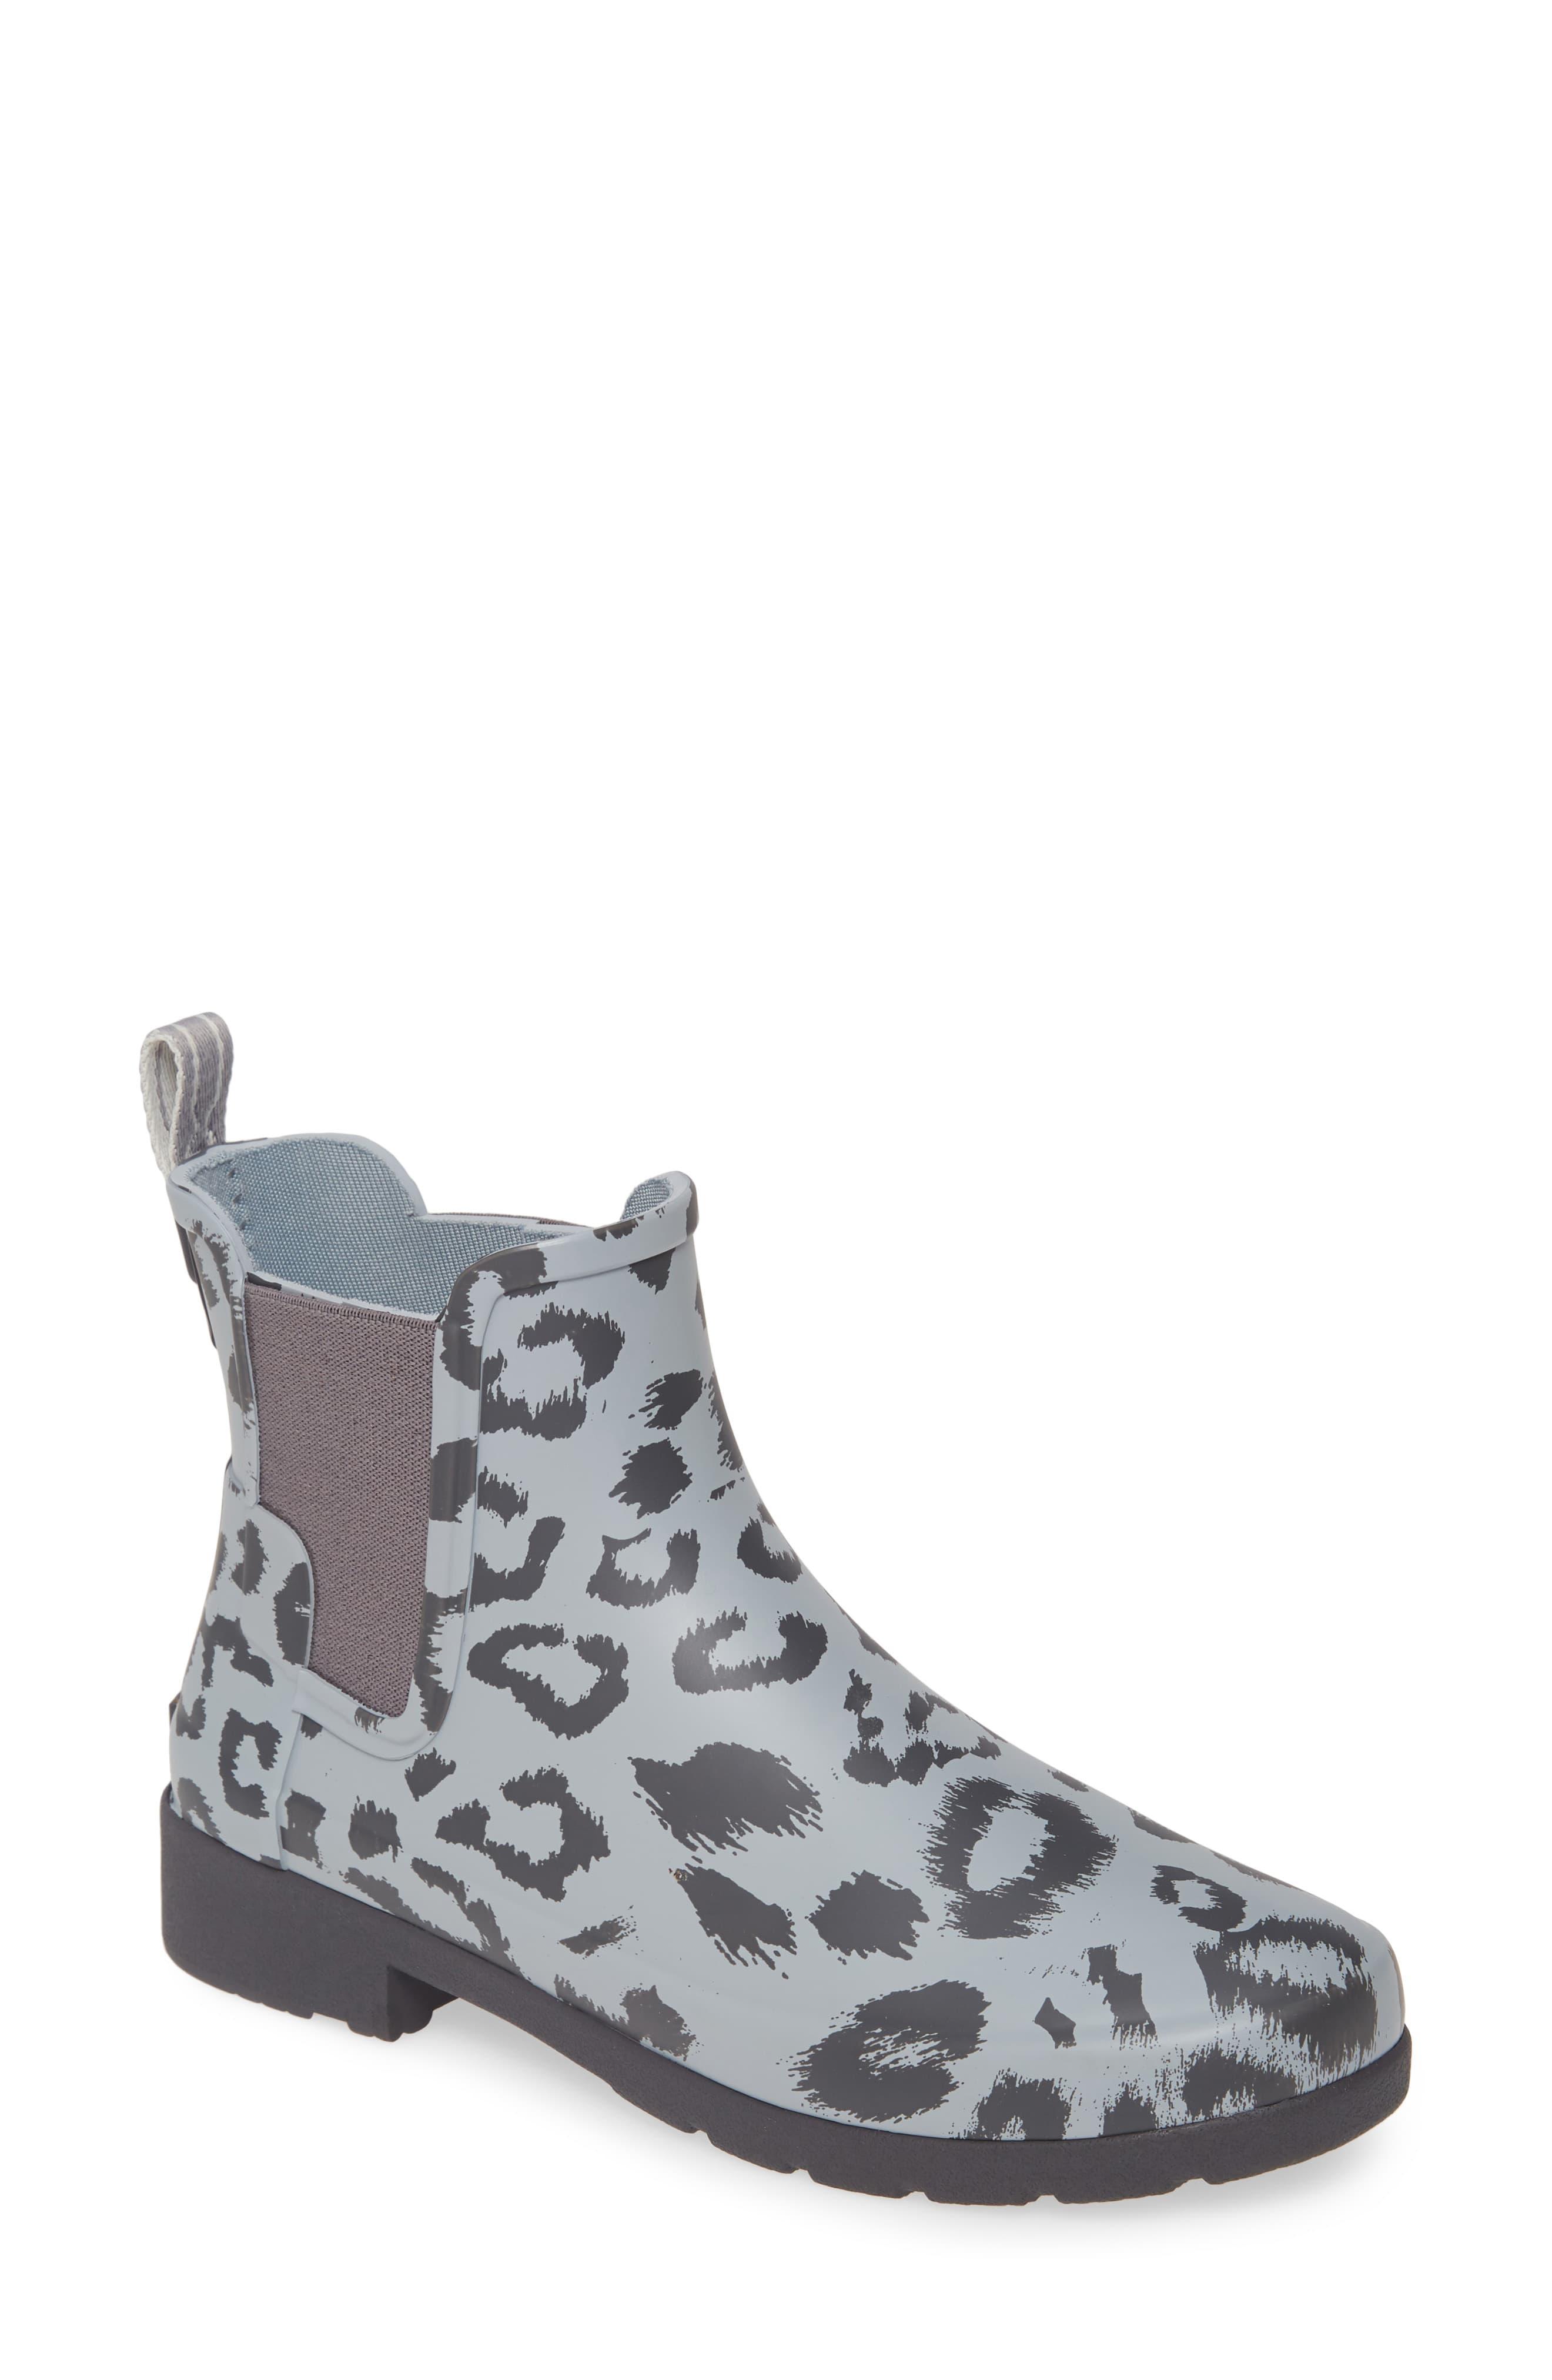 hunter rain boots leopard